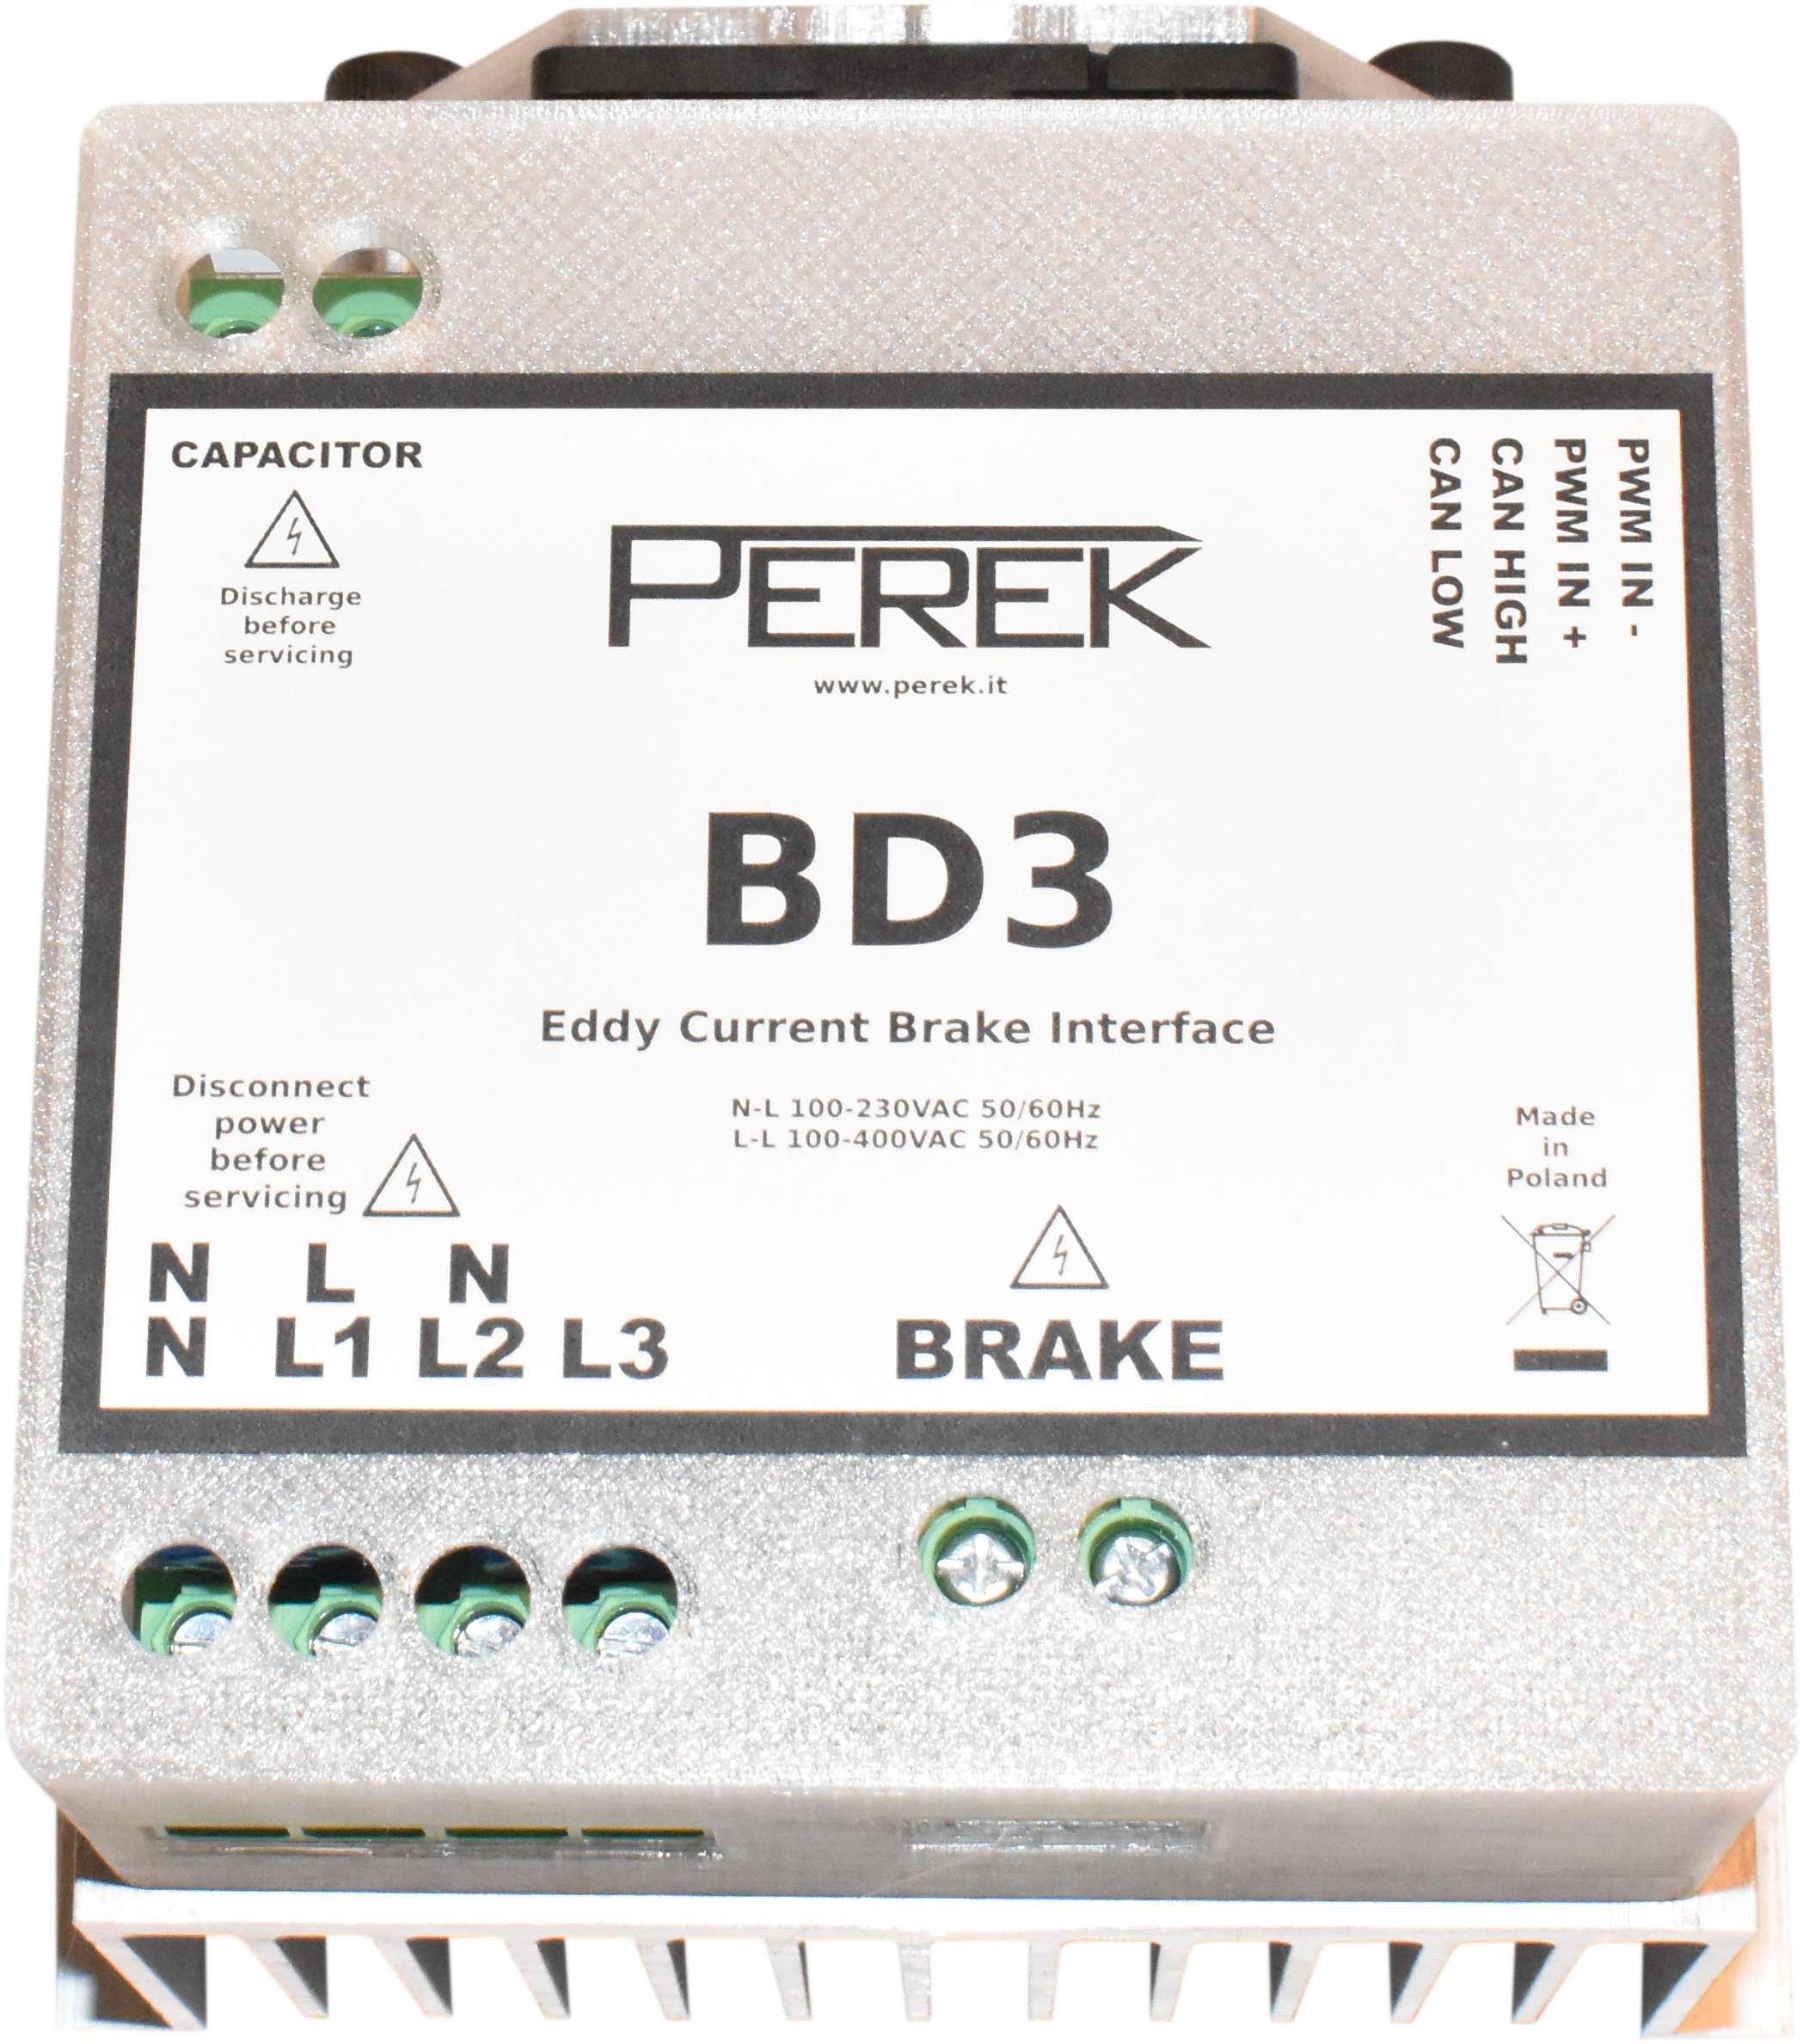 Fast eddy current brake interface BD3